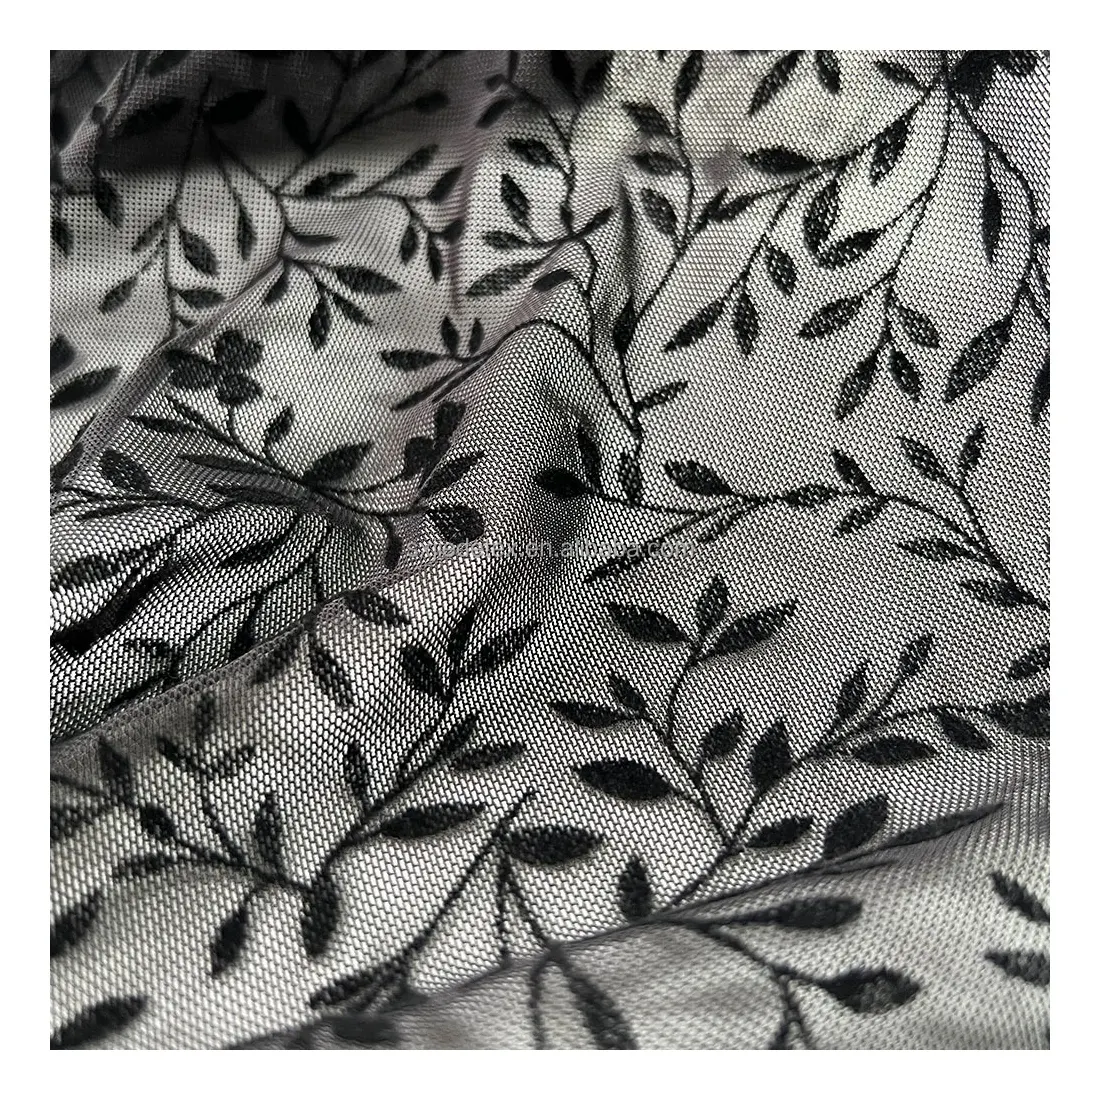 Desain baru ramah lingkungan Gaun mode antik bahan rajutan berkelompok kain dicetak tulle daun berkelompok kain jala